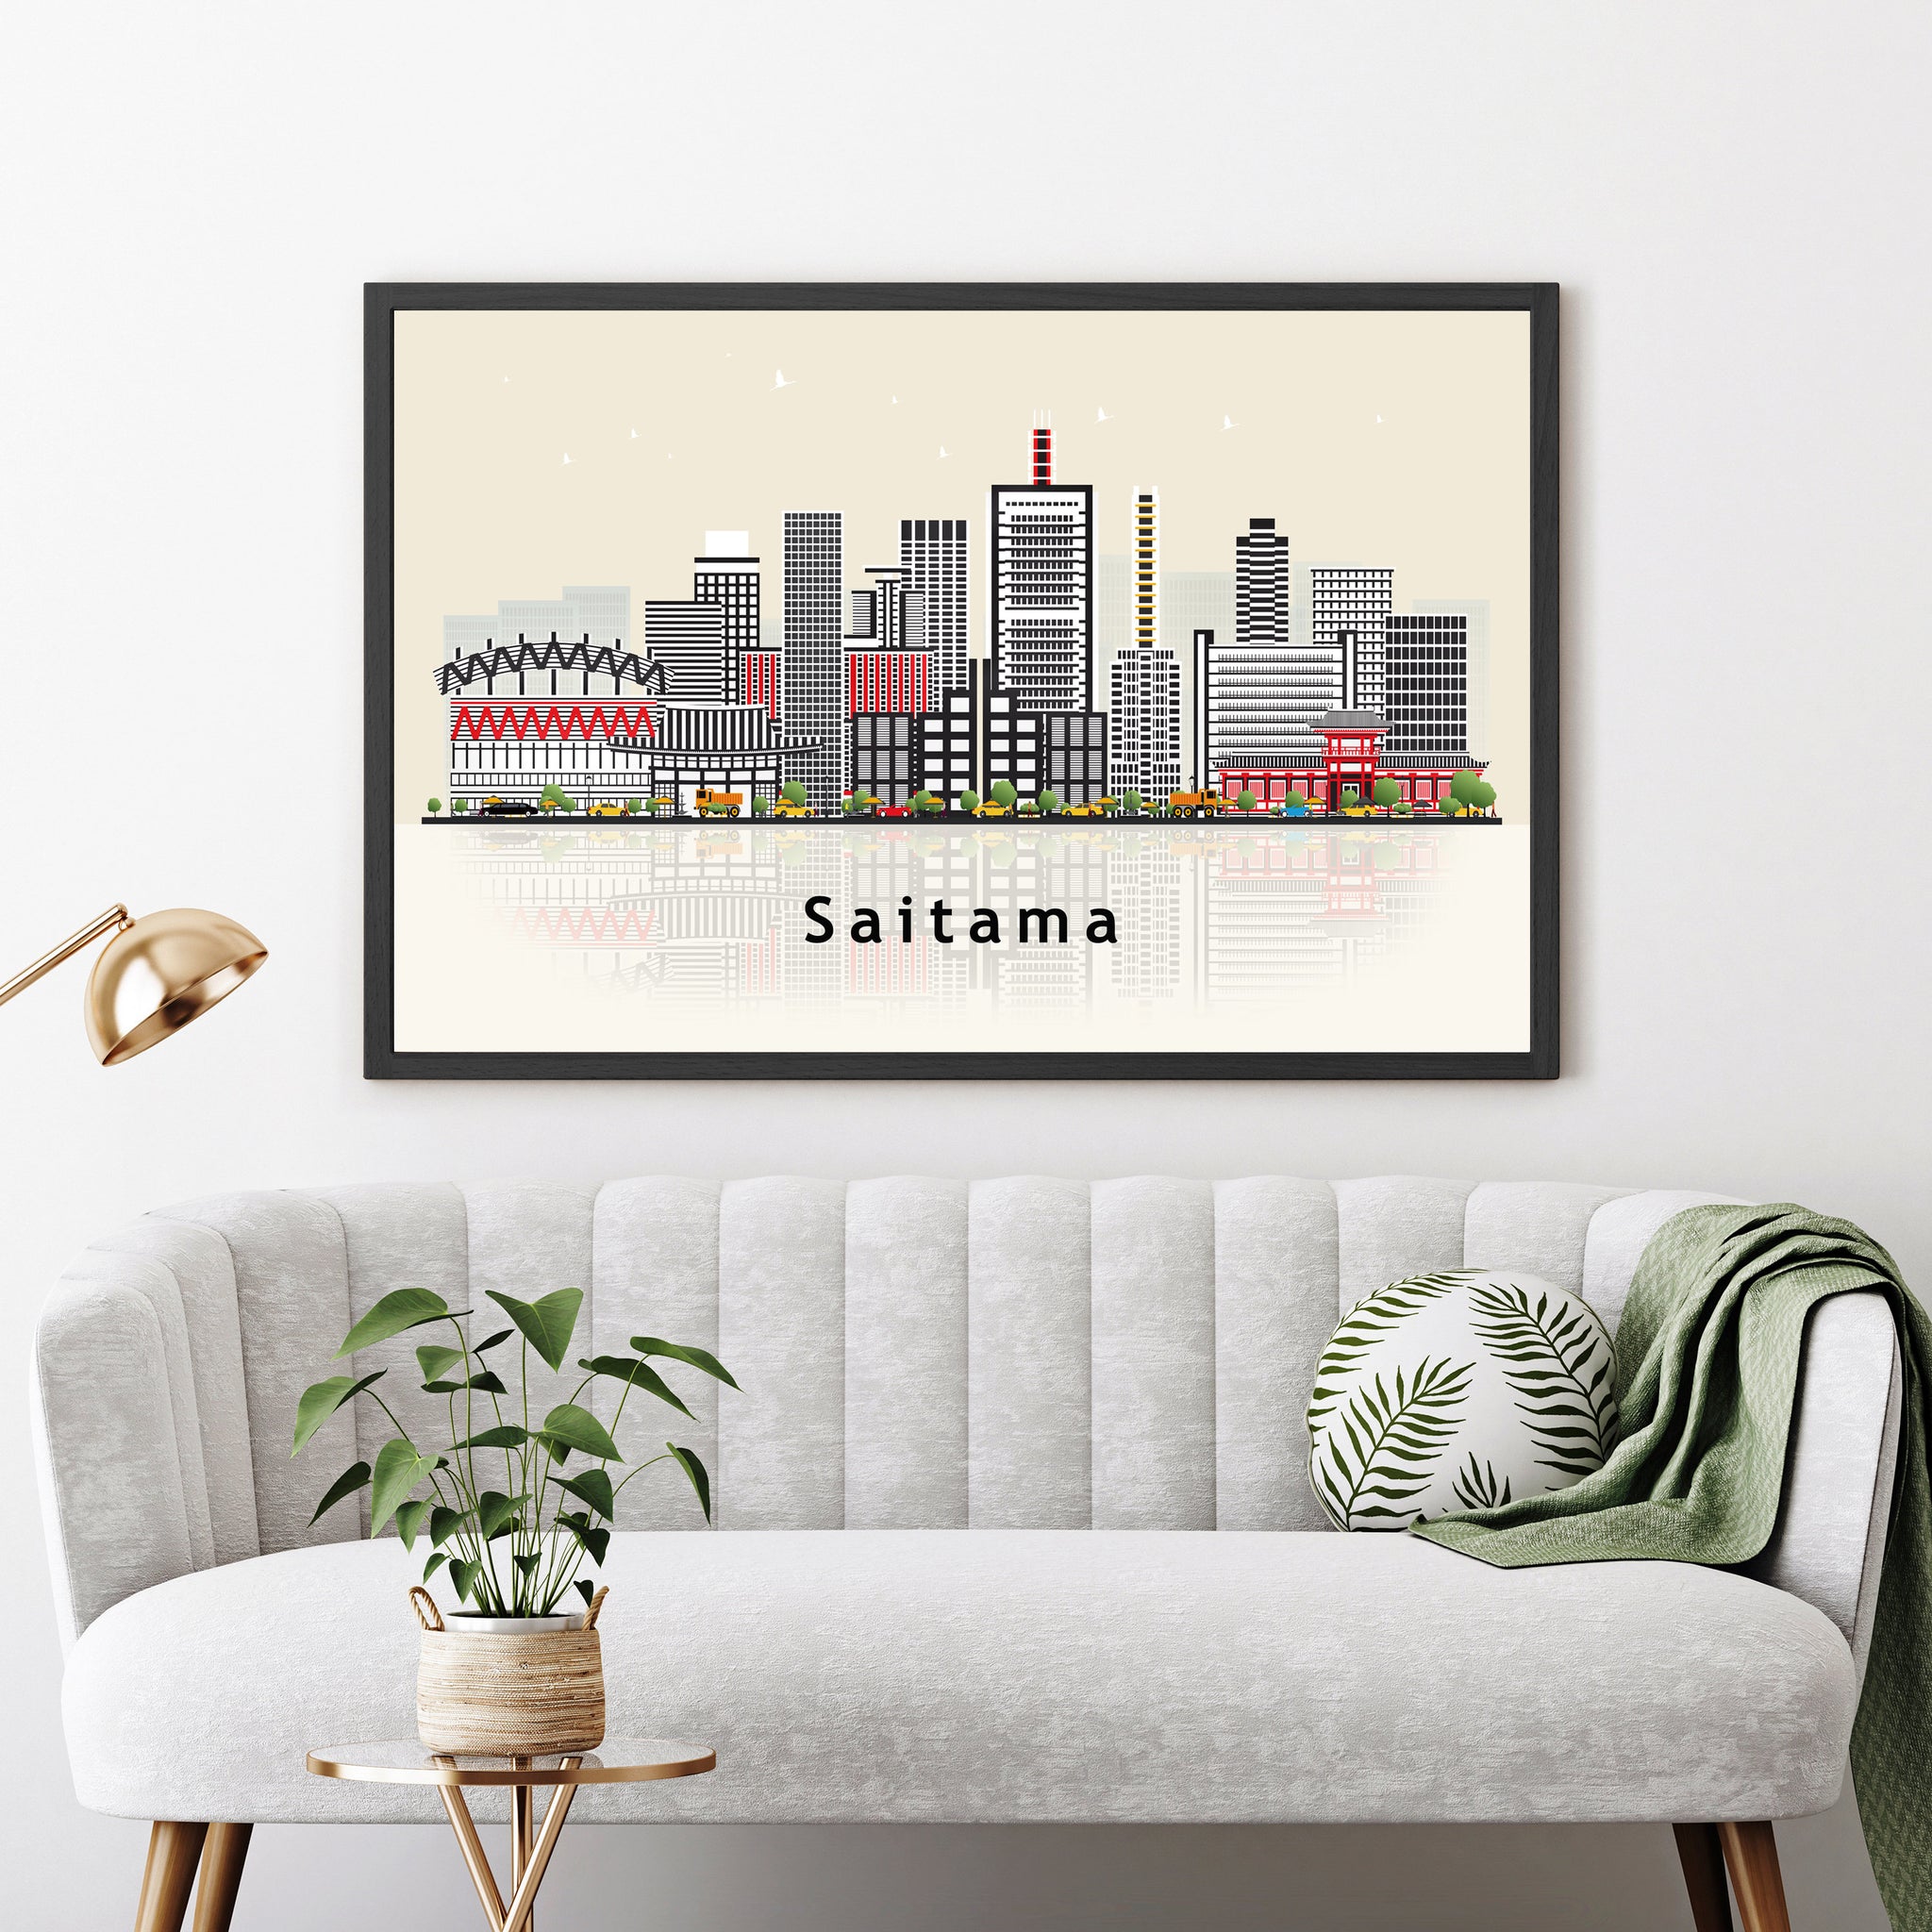 SAITAMA JAPAN Illustration skyline poster, Modern skyline cityscape poster, Japan city skyline landmark map poster, Home wall decorations